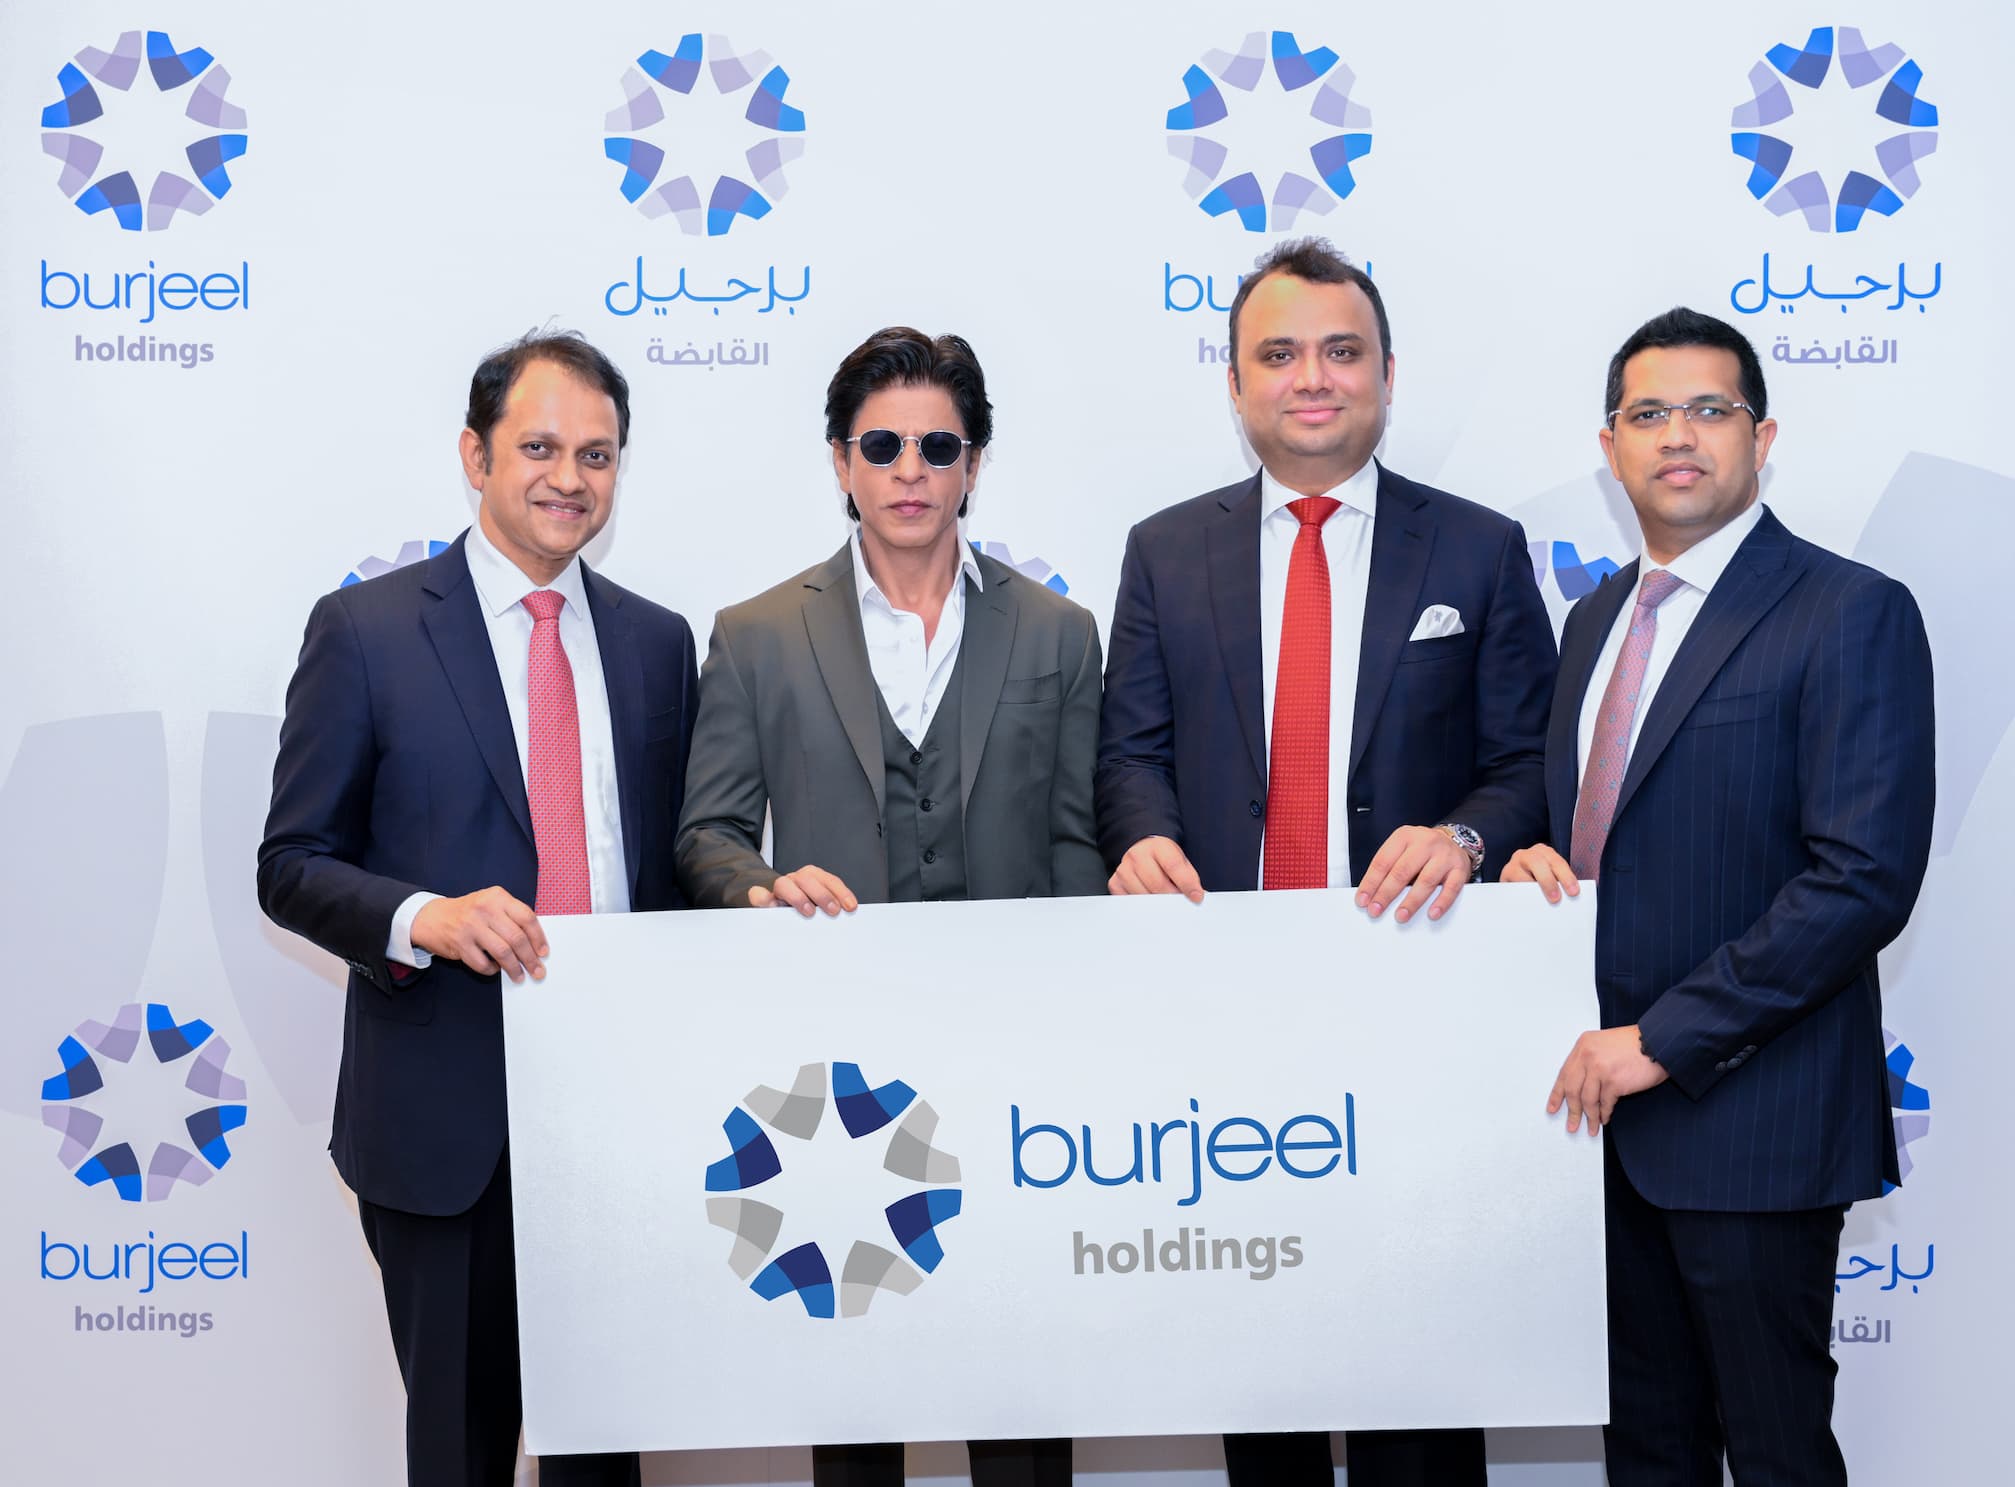 UAE Healthcare Leader Burjeel Holdings Appoints Shah Rukh Khan as Brand Ambassador